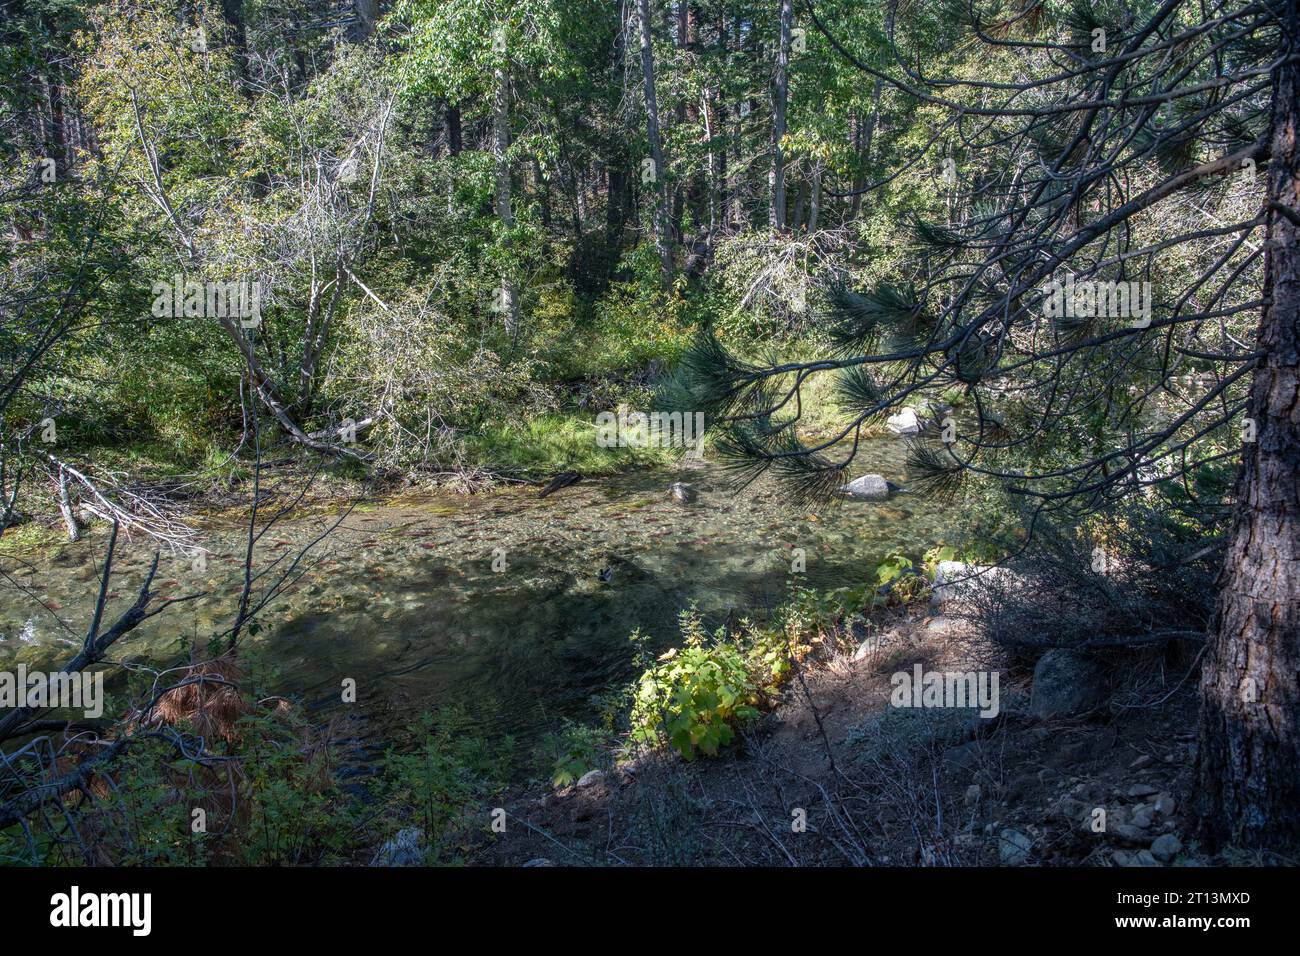 A small freshwater creek filled with spawning kokanee salmon (Oncorhynchus nerka). Stock Photo